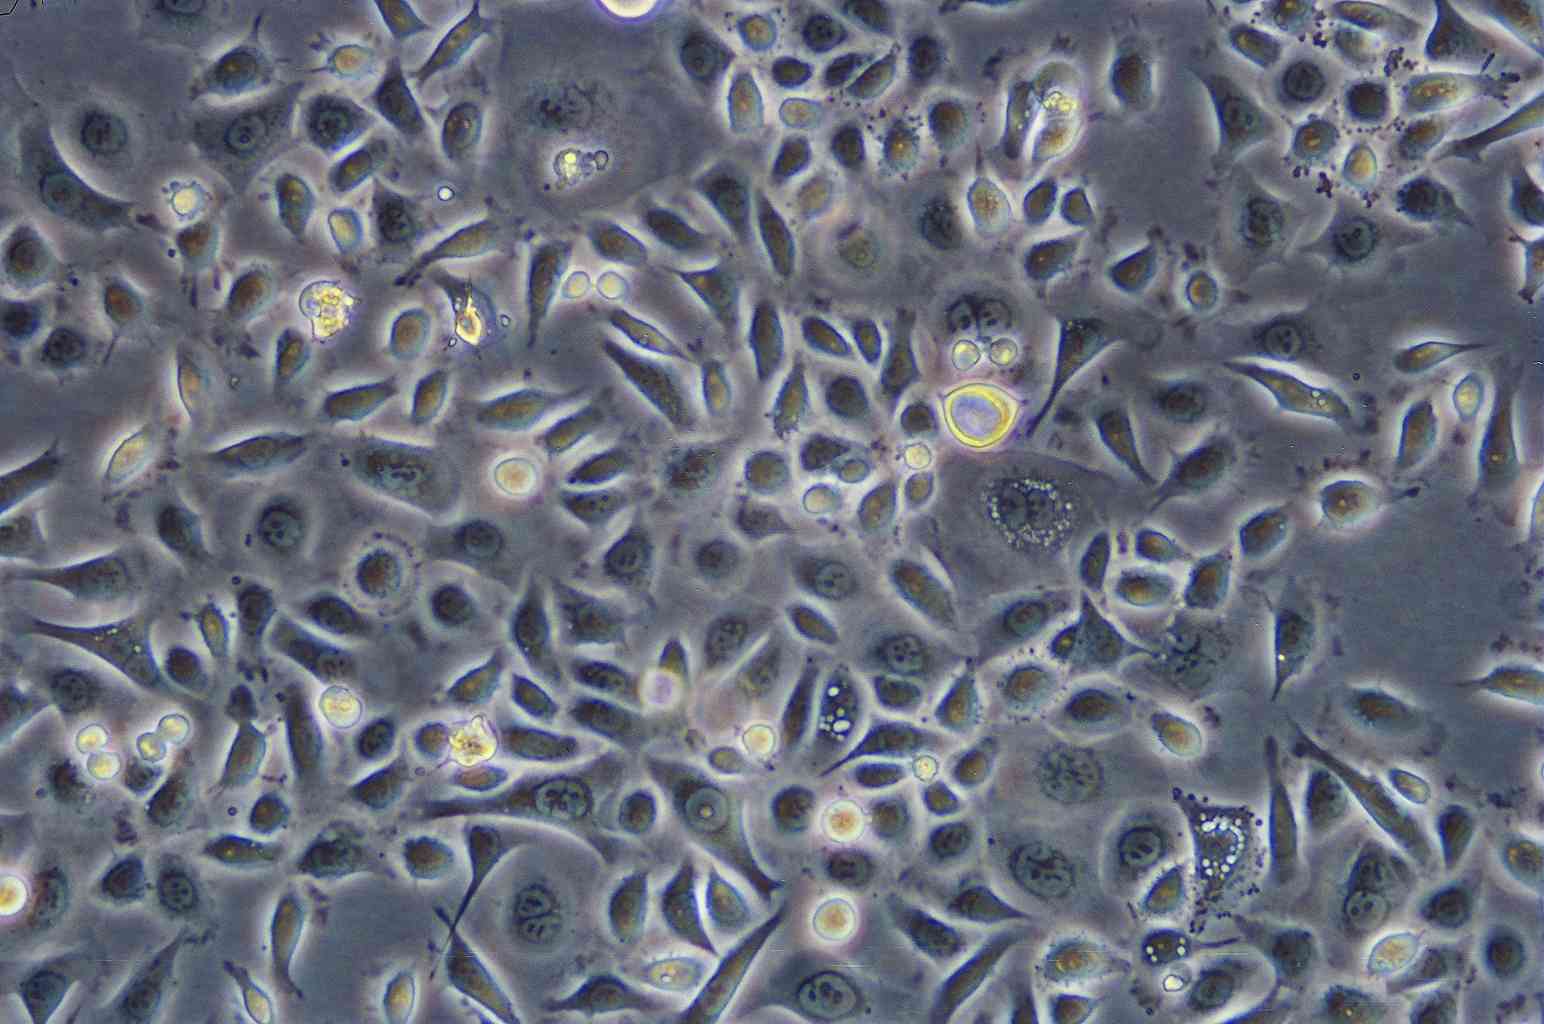 B16-BL6 epithelioid cells小鼠黑色素瘤细胞系